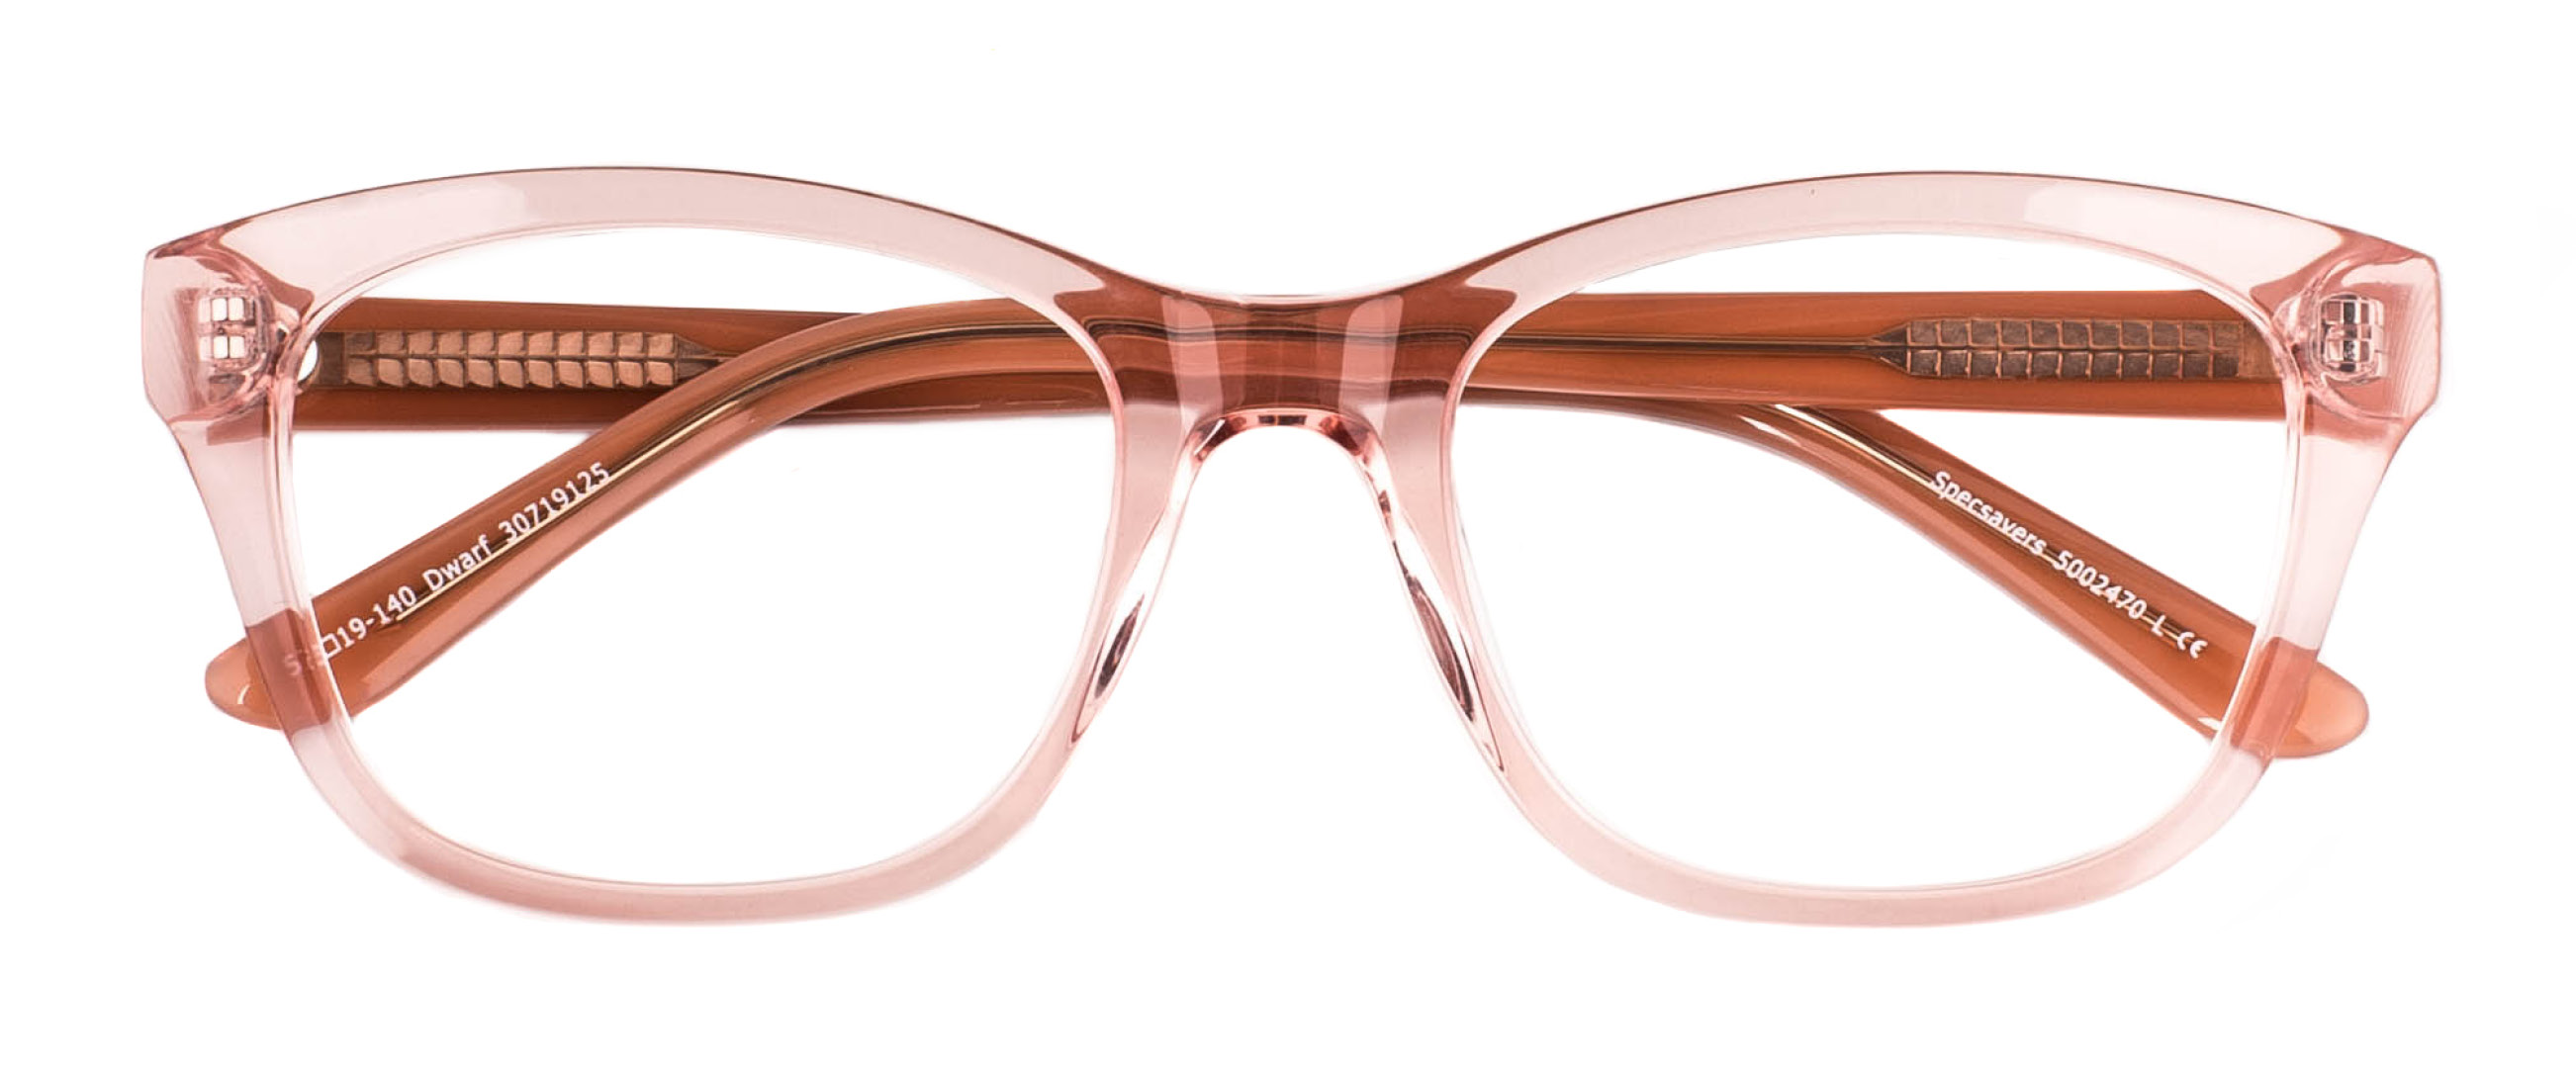 New shades #fyp #specsavers #glasses #sunglasses #foryou | TikTok